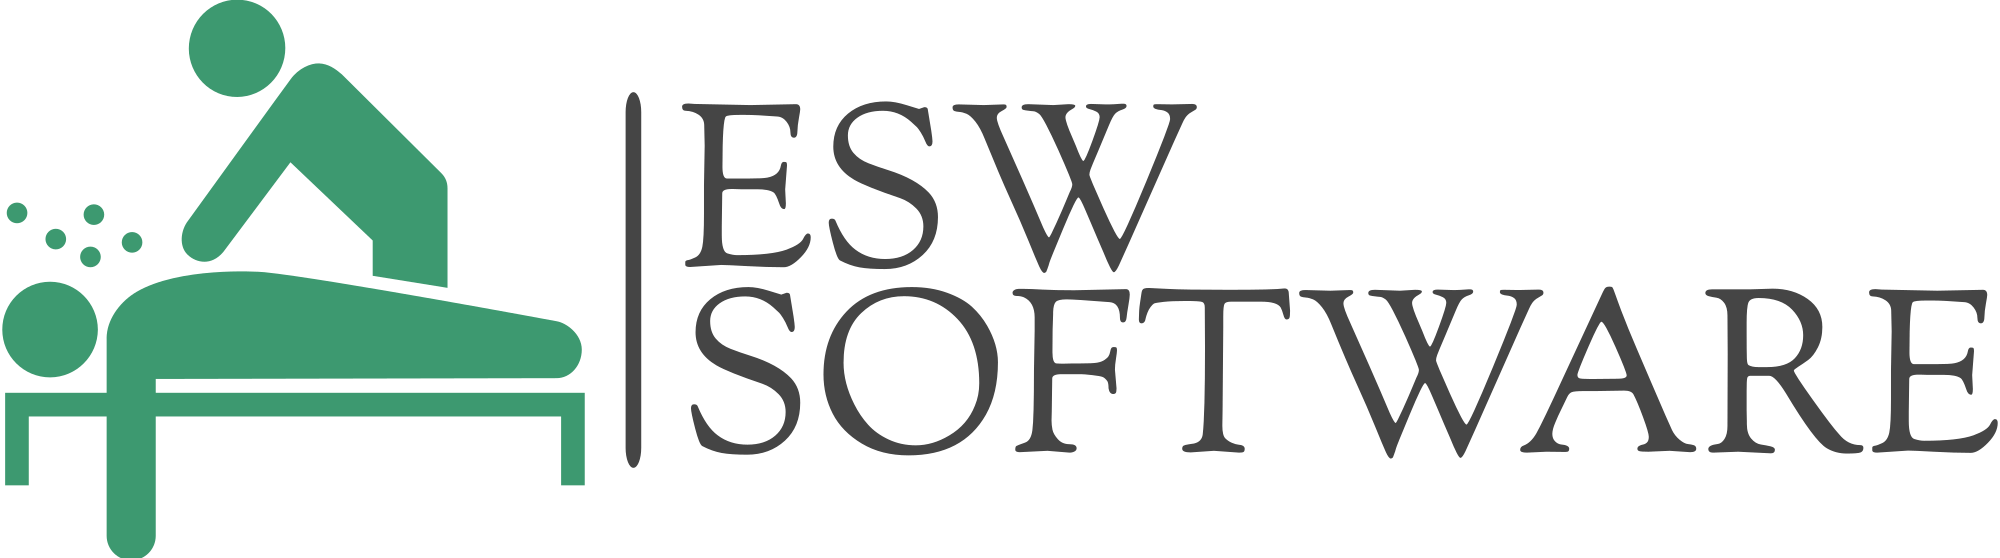 ESW Software